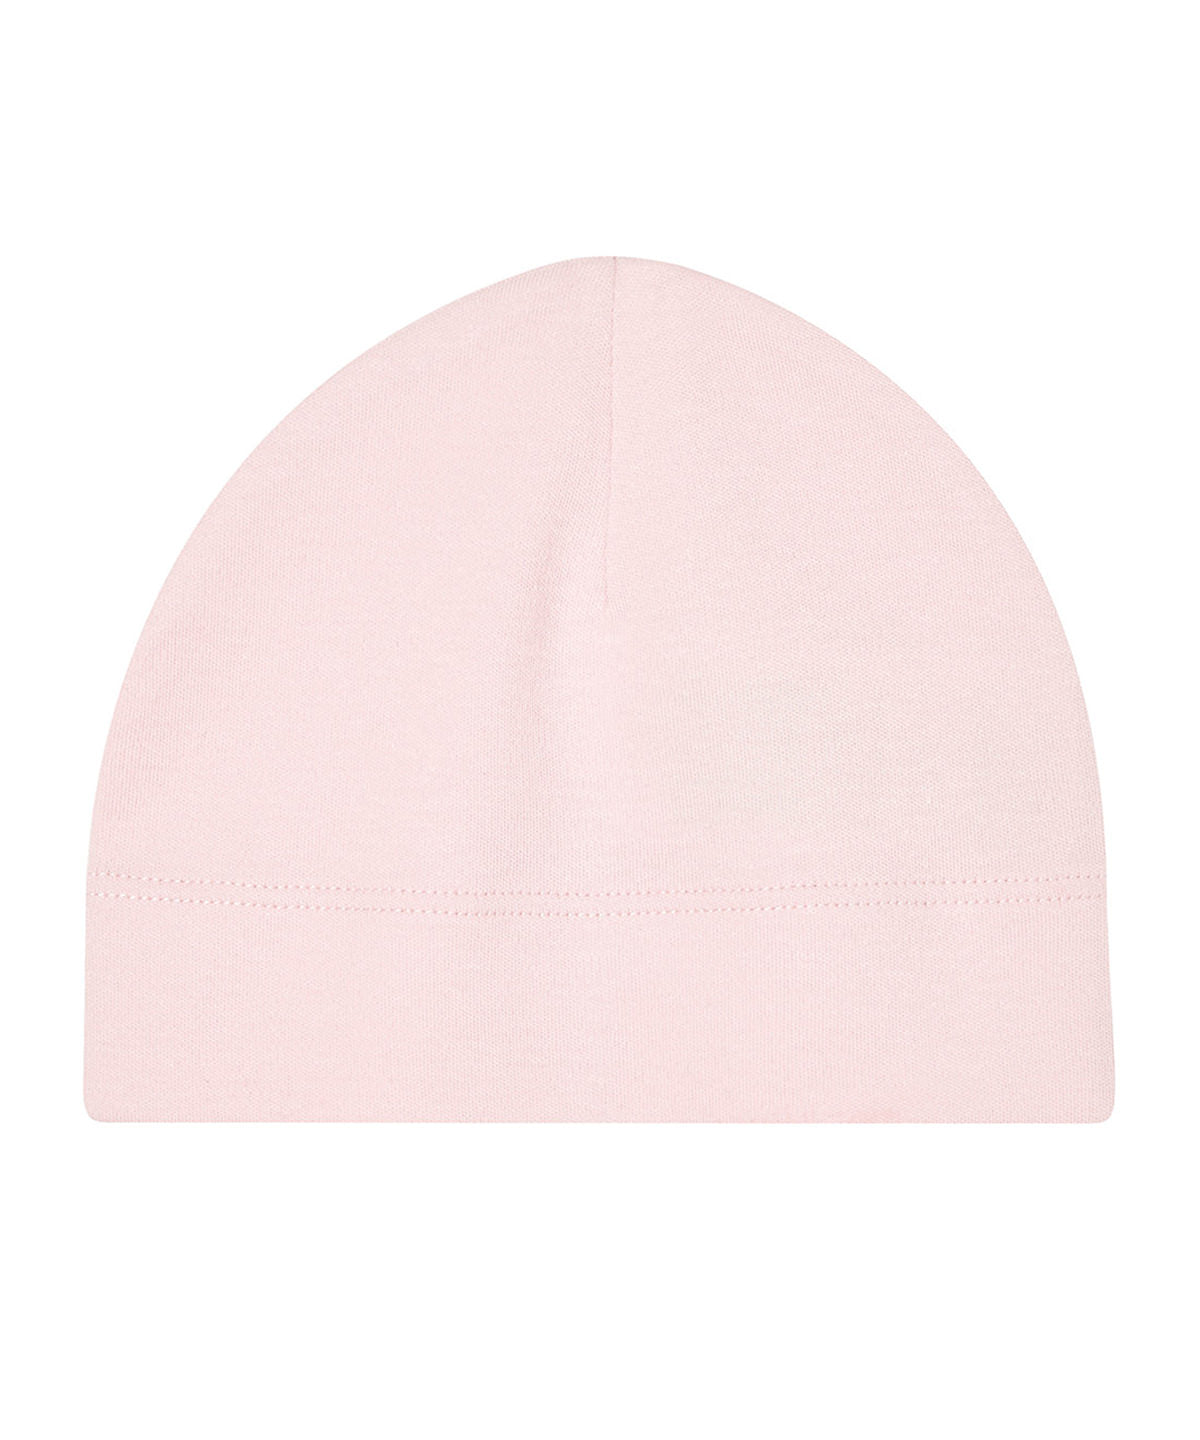 Personalised Hats - Light Pink Babybugz Baby hat